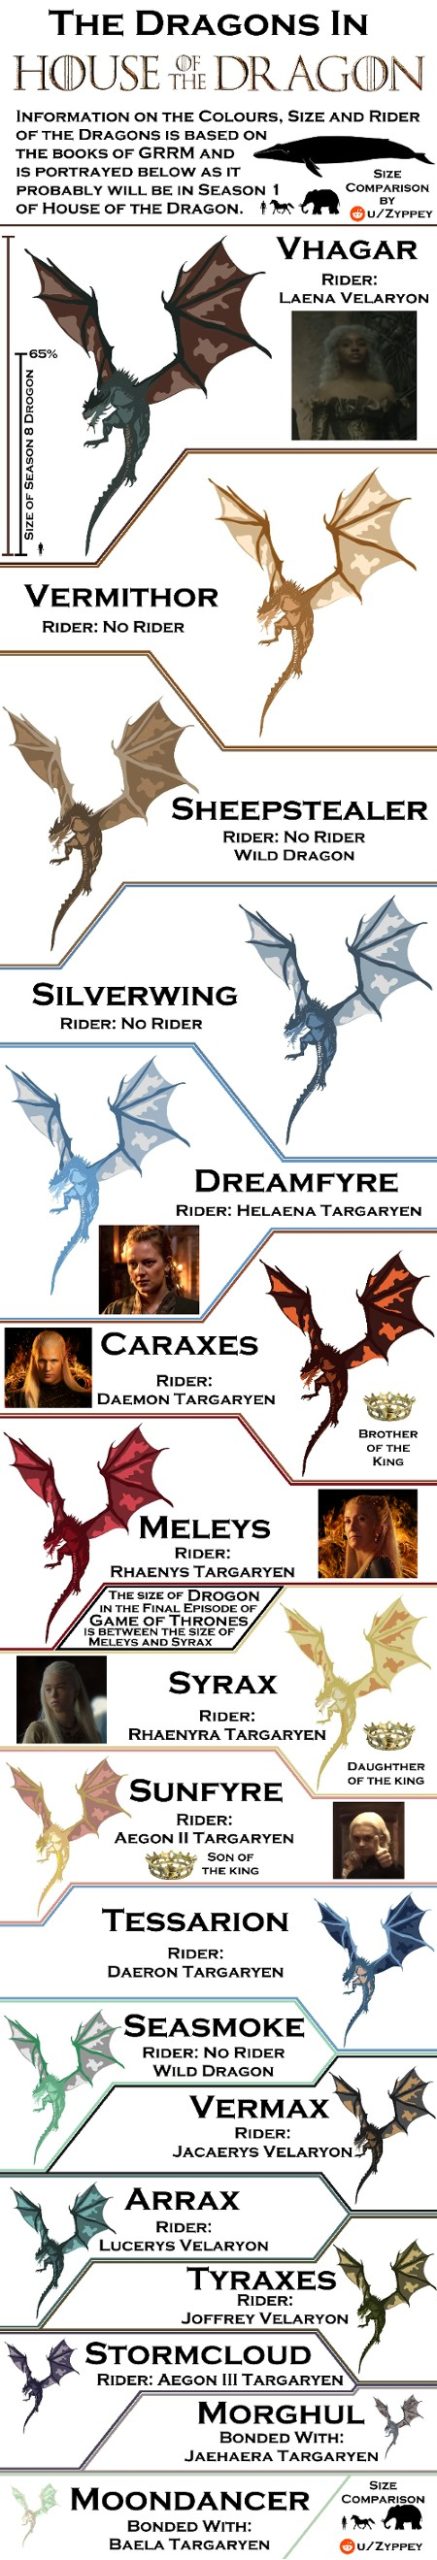 Dragon-comparison-6247892-scaled.jpg